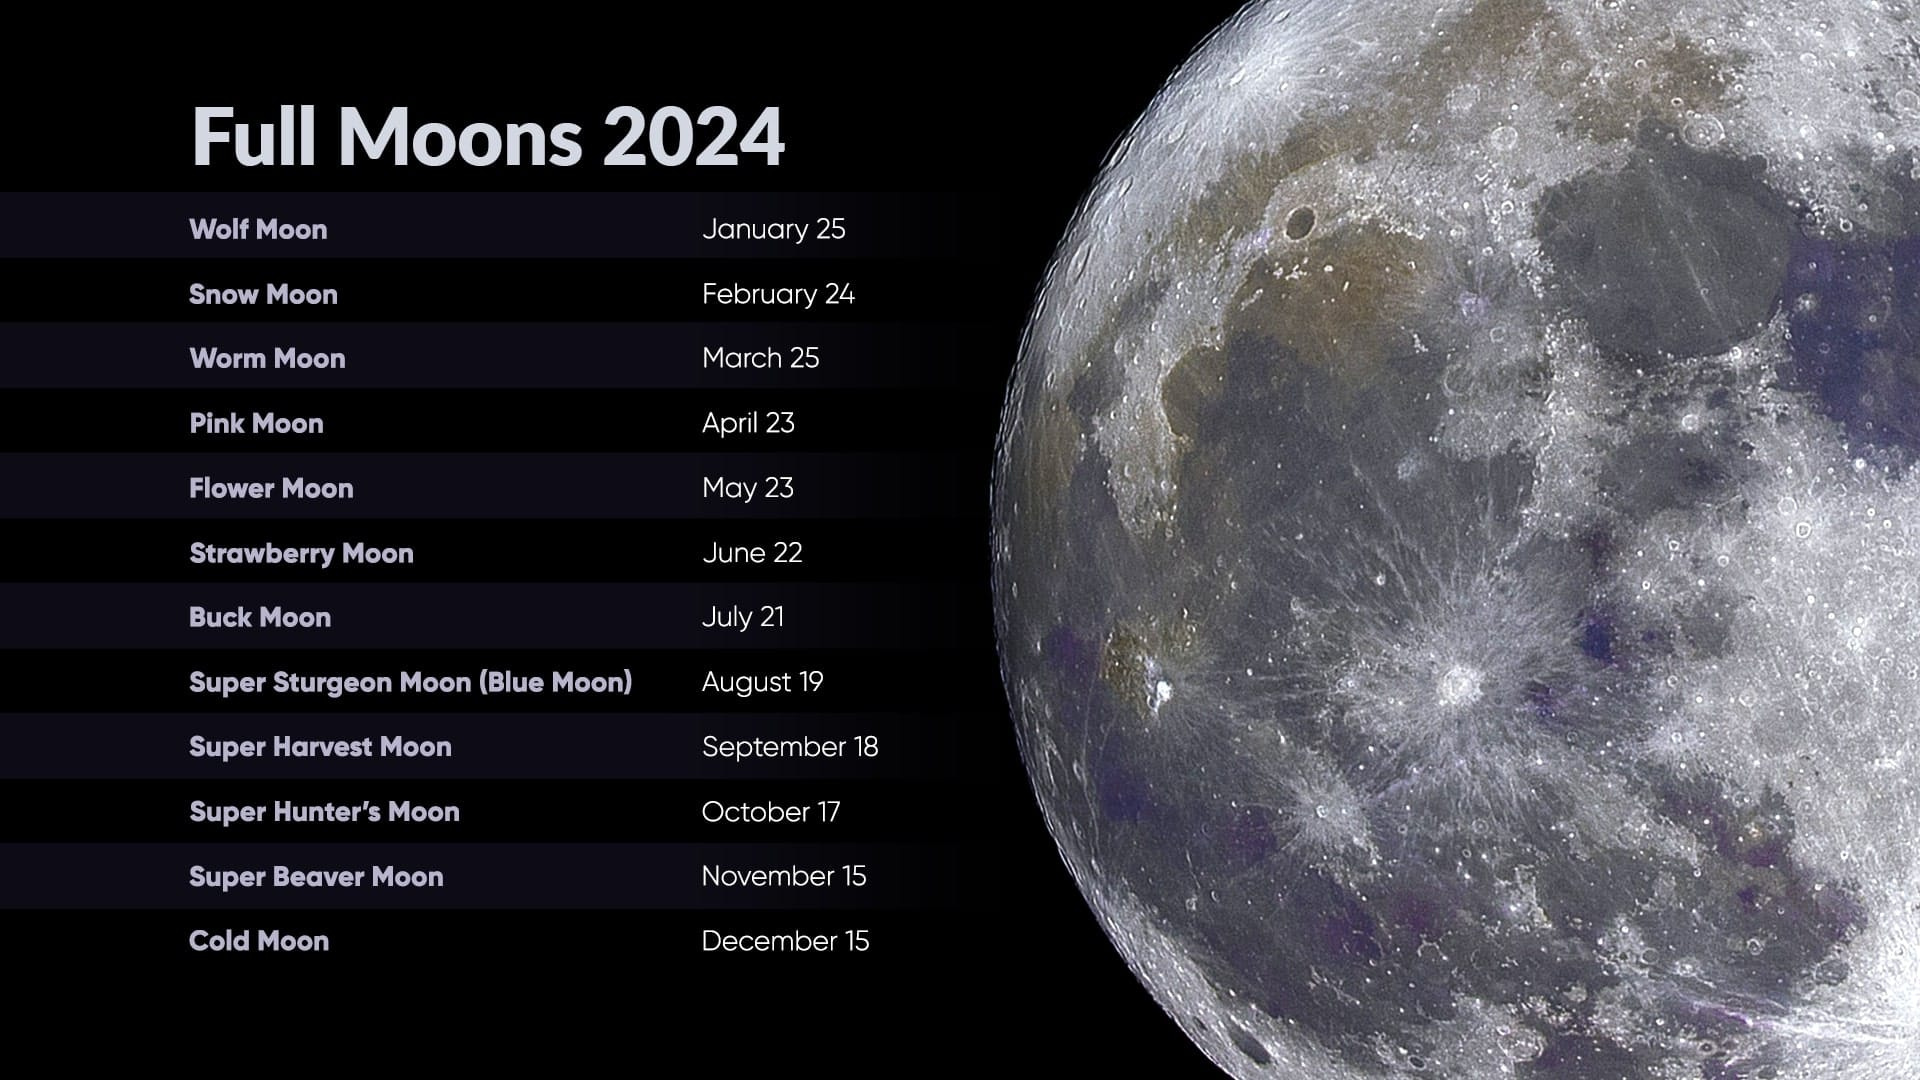 Next Full Moon | February Full Moon 2024 | Full Moon Schedule 2024 in June 2024 Full Moon Calendar